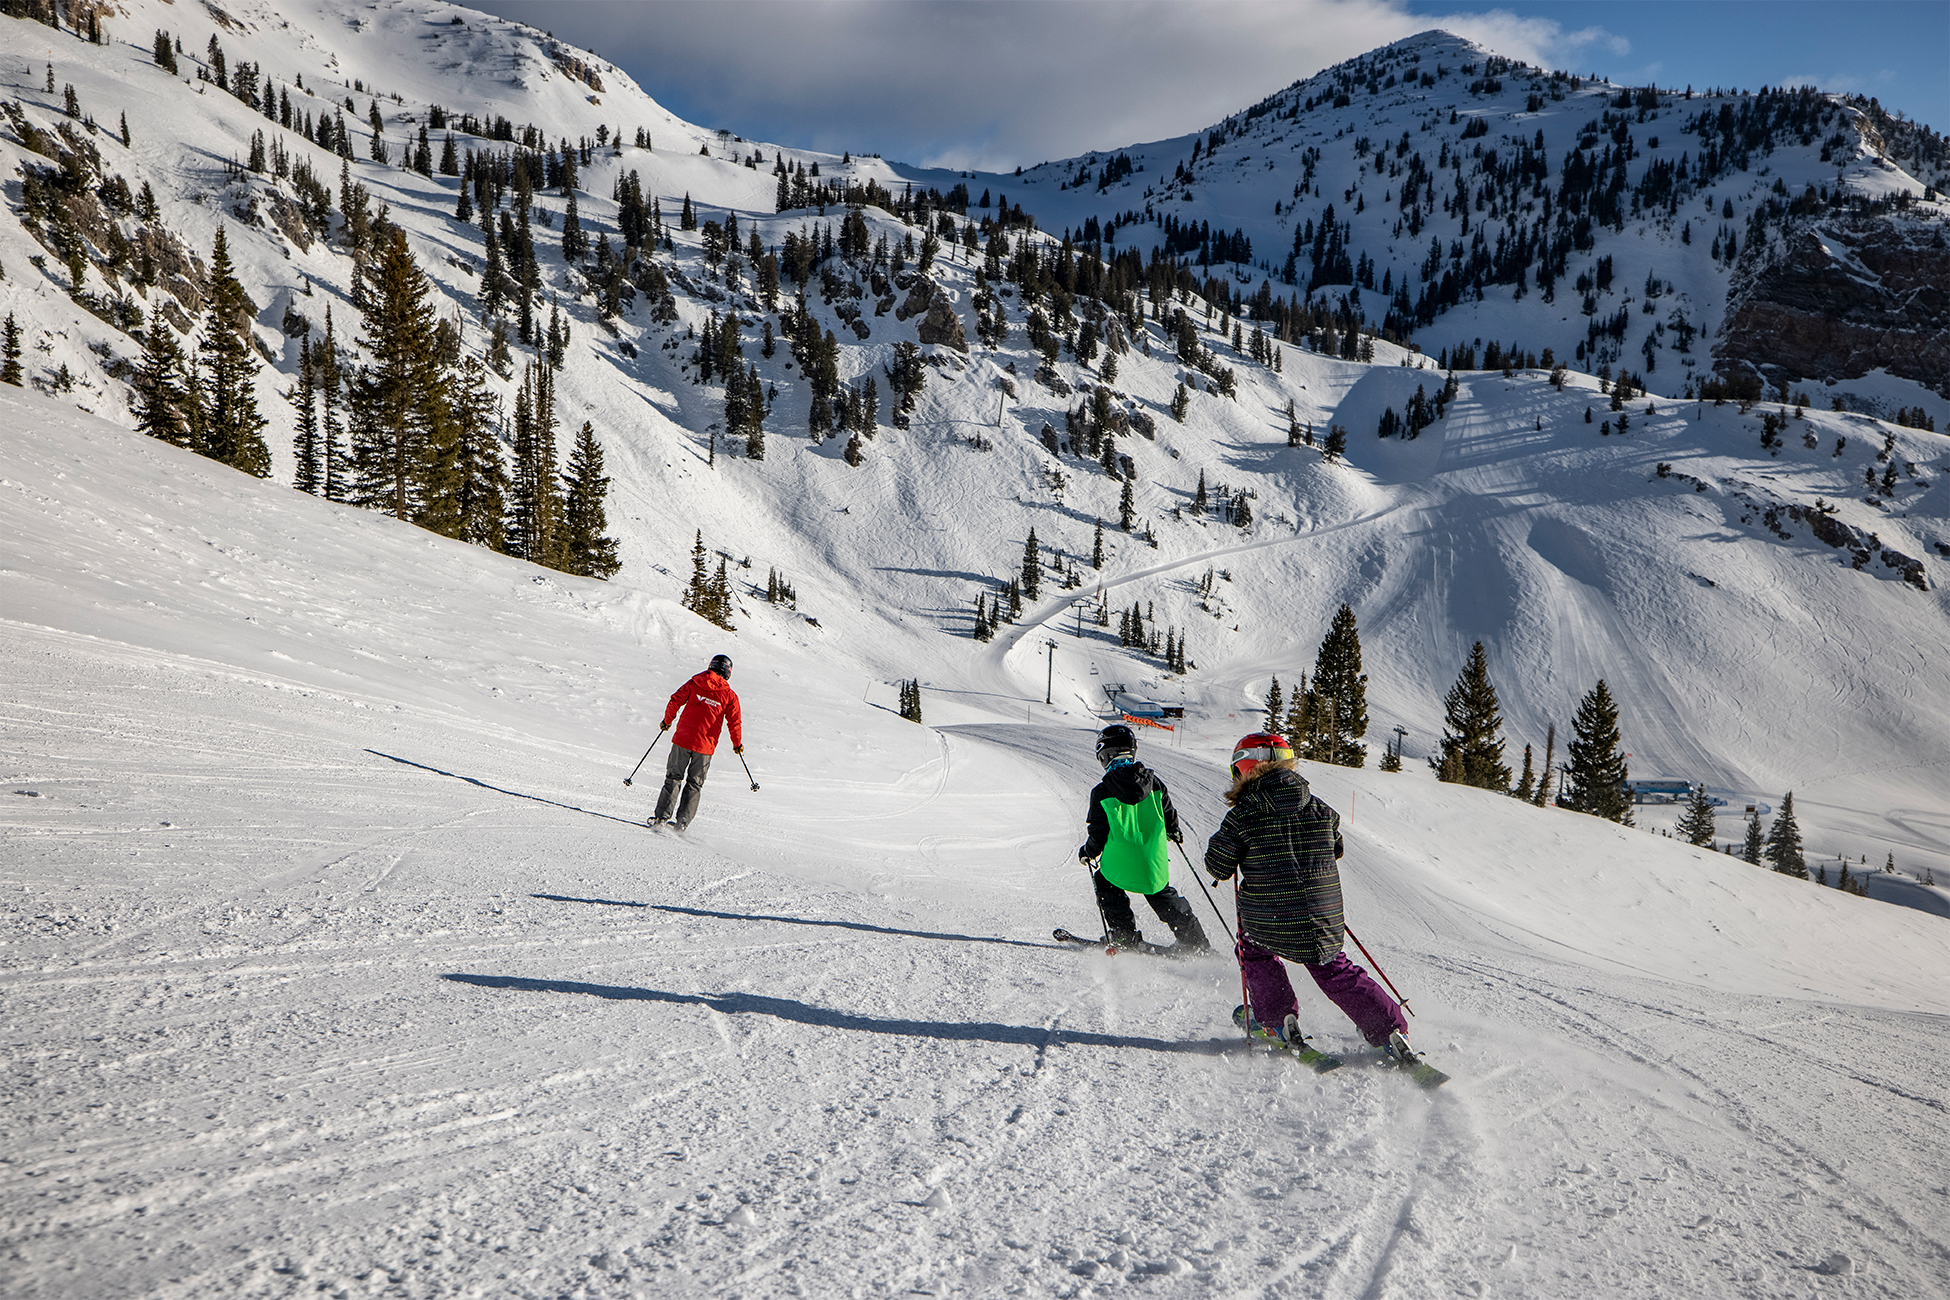 Youth ski programs & ski clinics at Snowbird